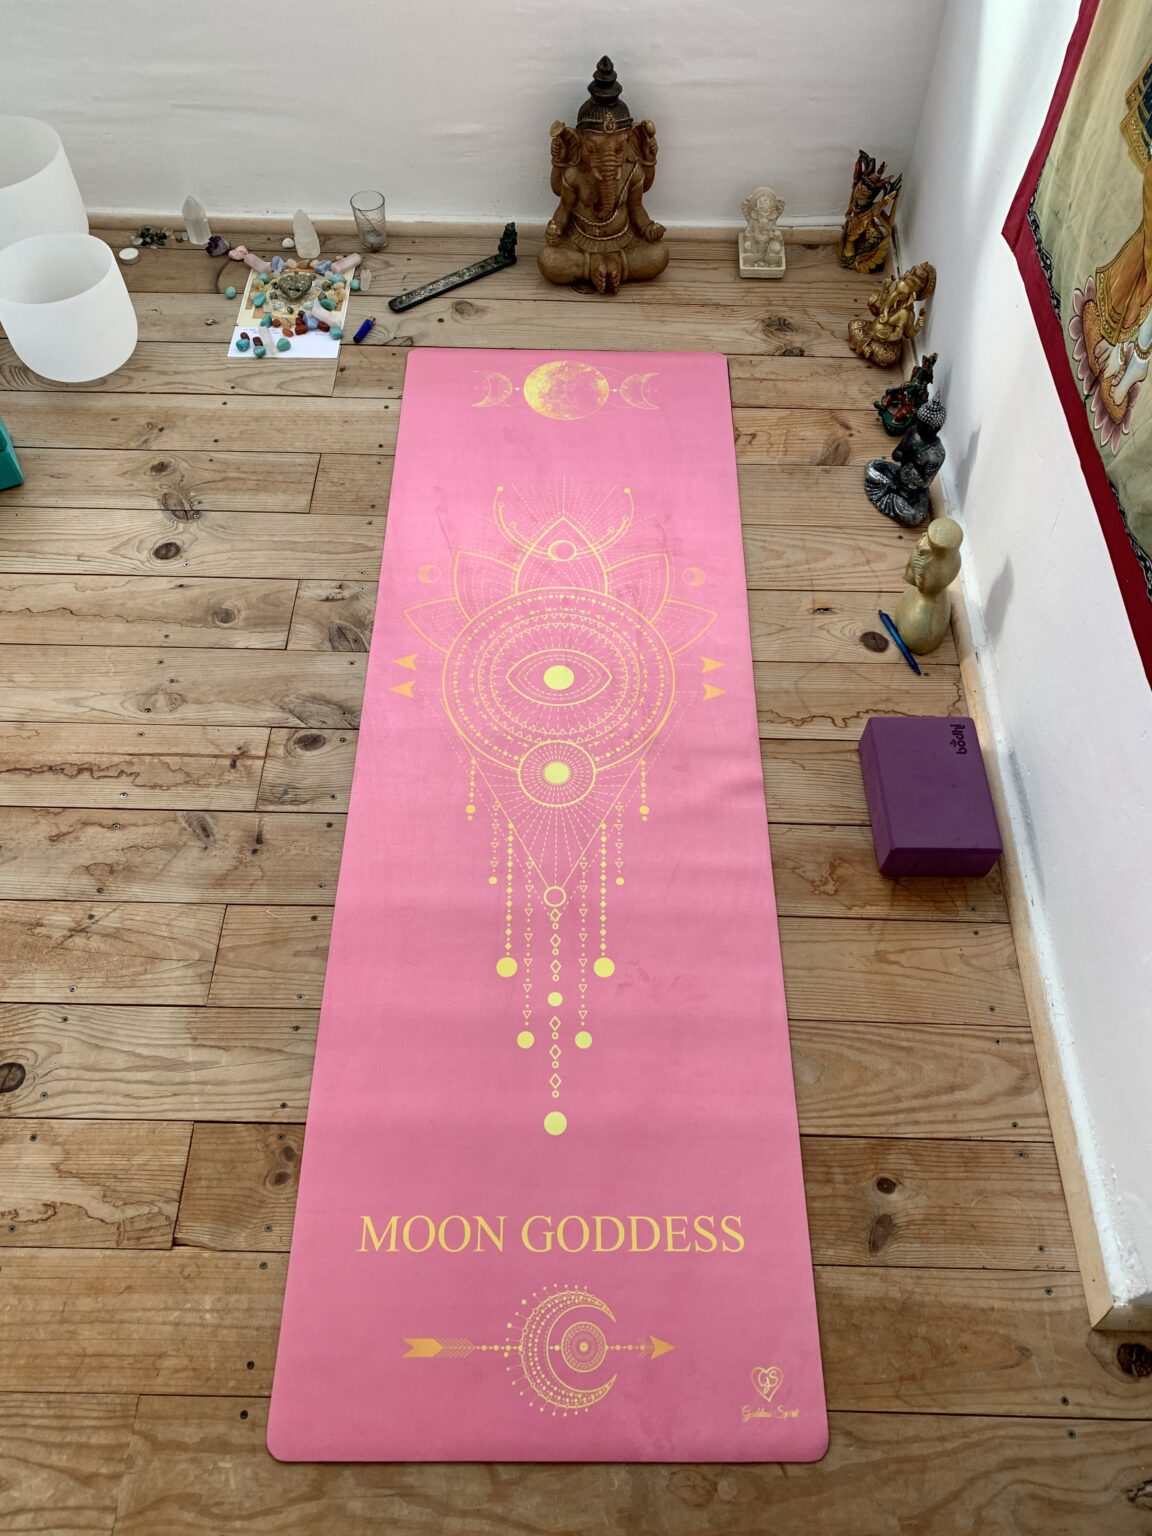 moon yoga travel mat